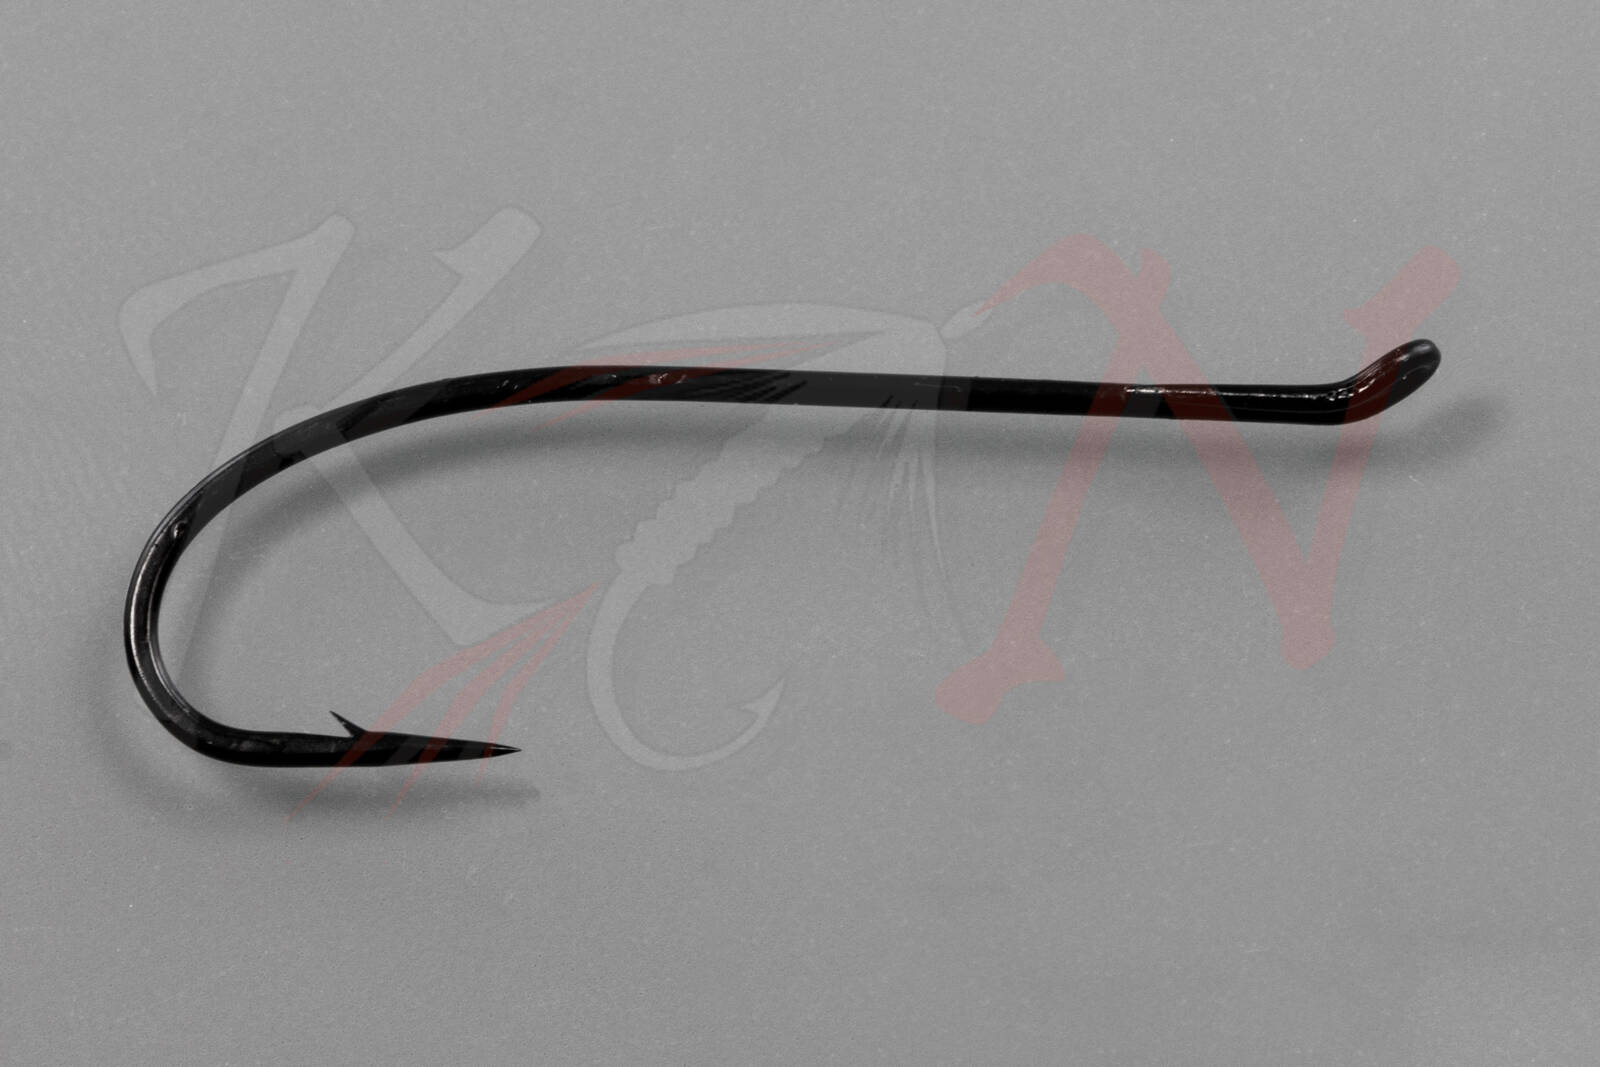 Ahrex HR410 Tying Single - Salmon fly hooks - online webshop